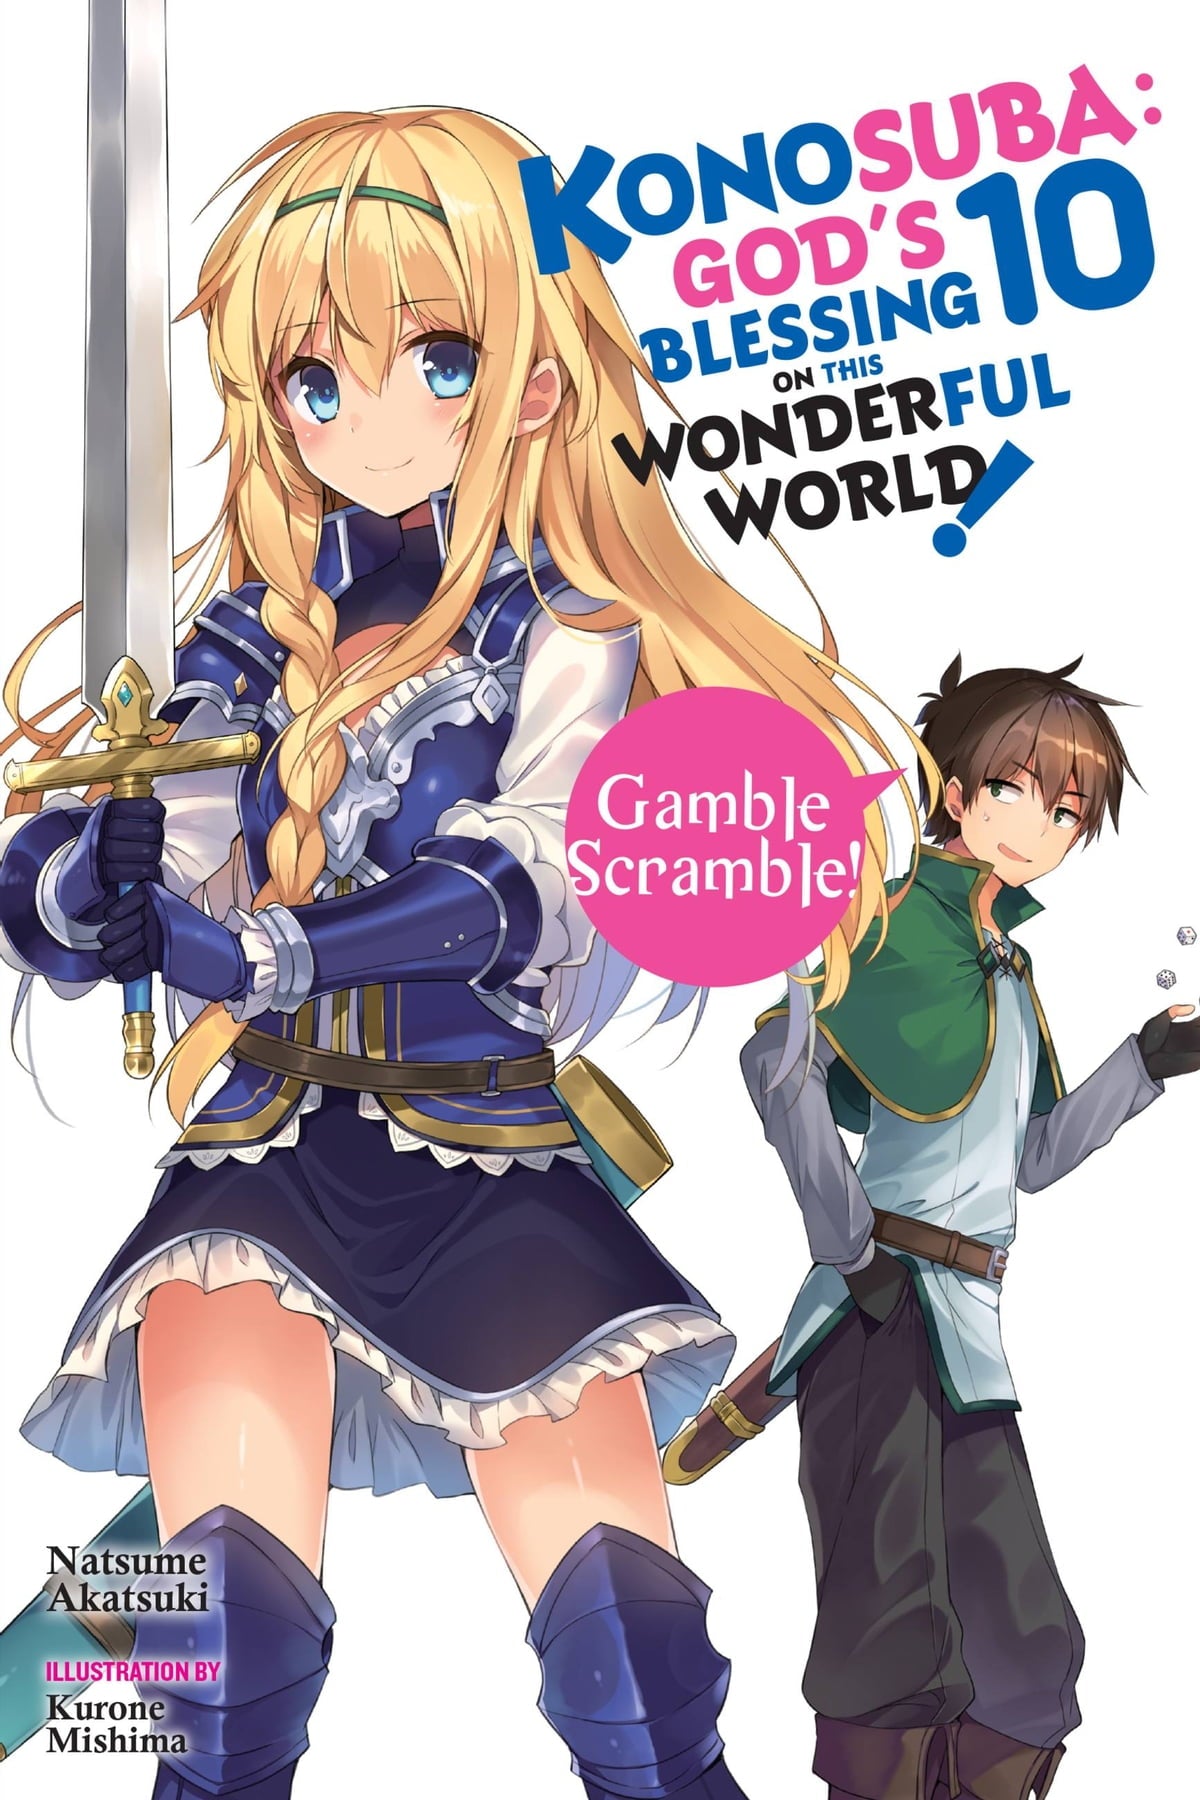 Konosuba: God's Blessing on This Wonderful World! Vol. 10 (Light Novel): Gamble Scramble!